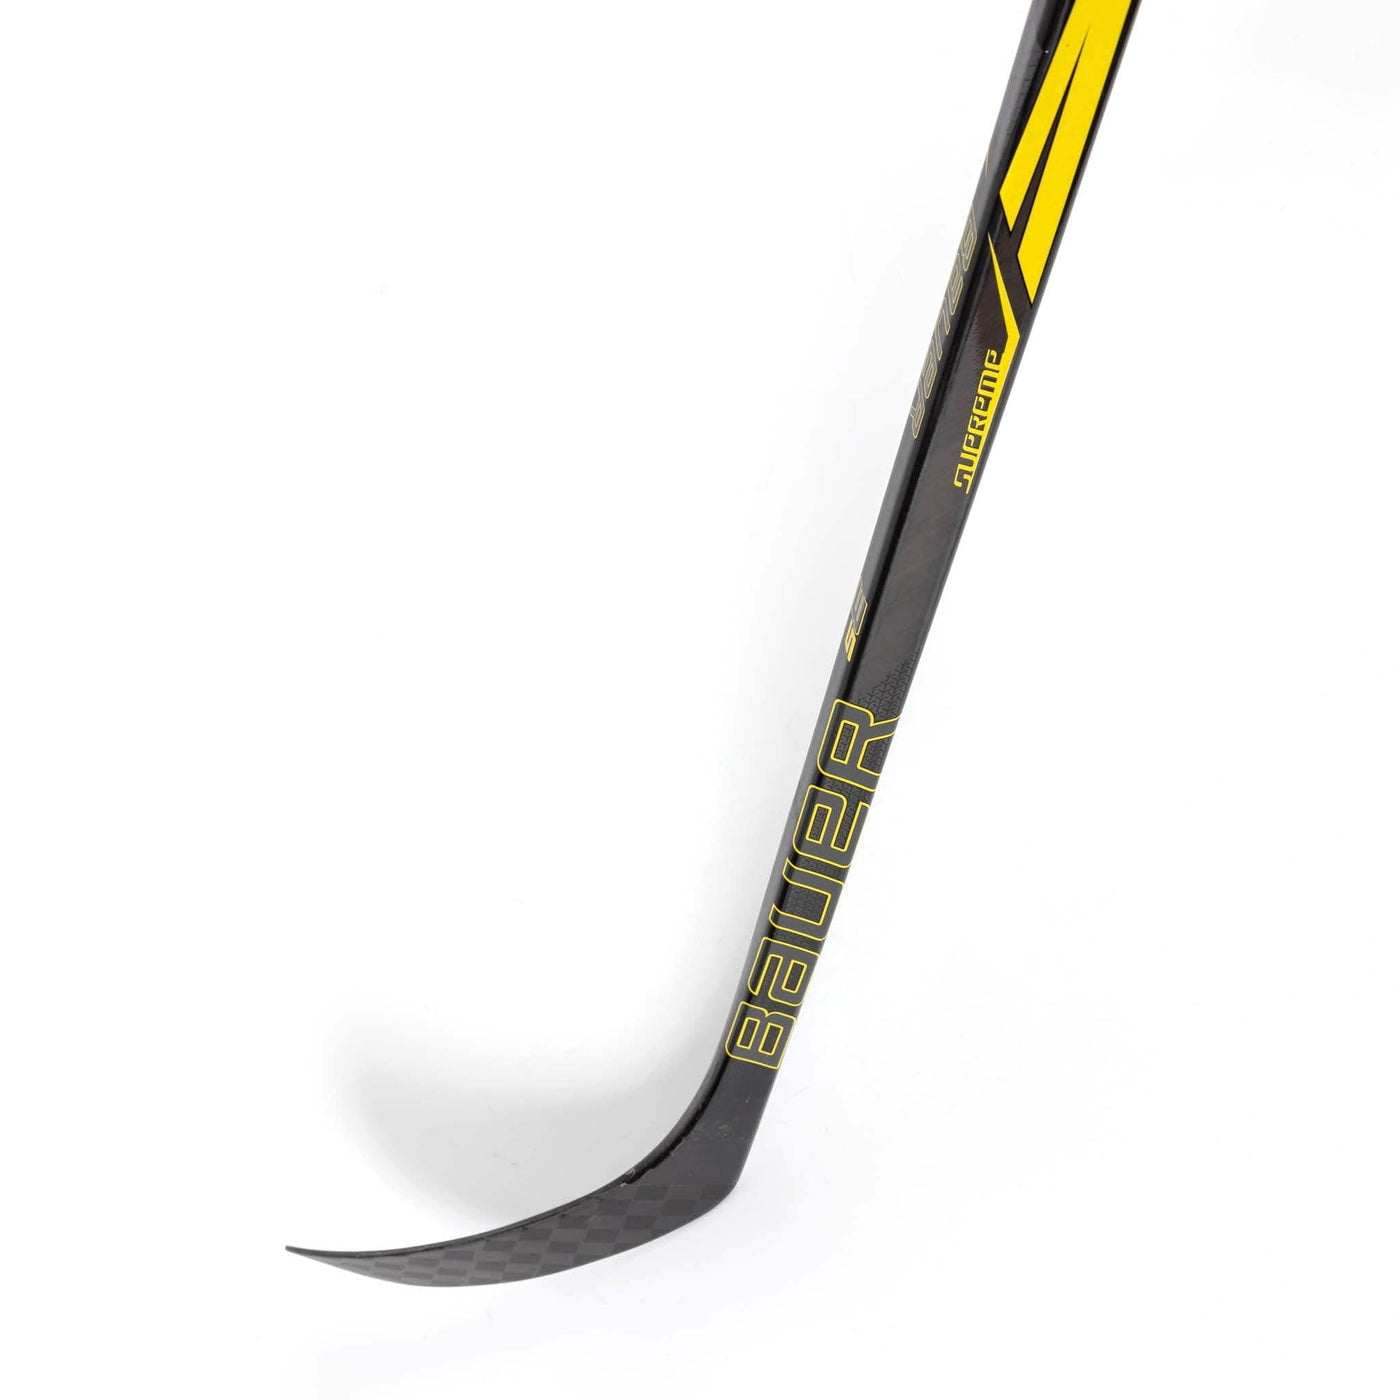 Bauer Supreme 3S Intermediate Hockey Stick